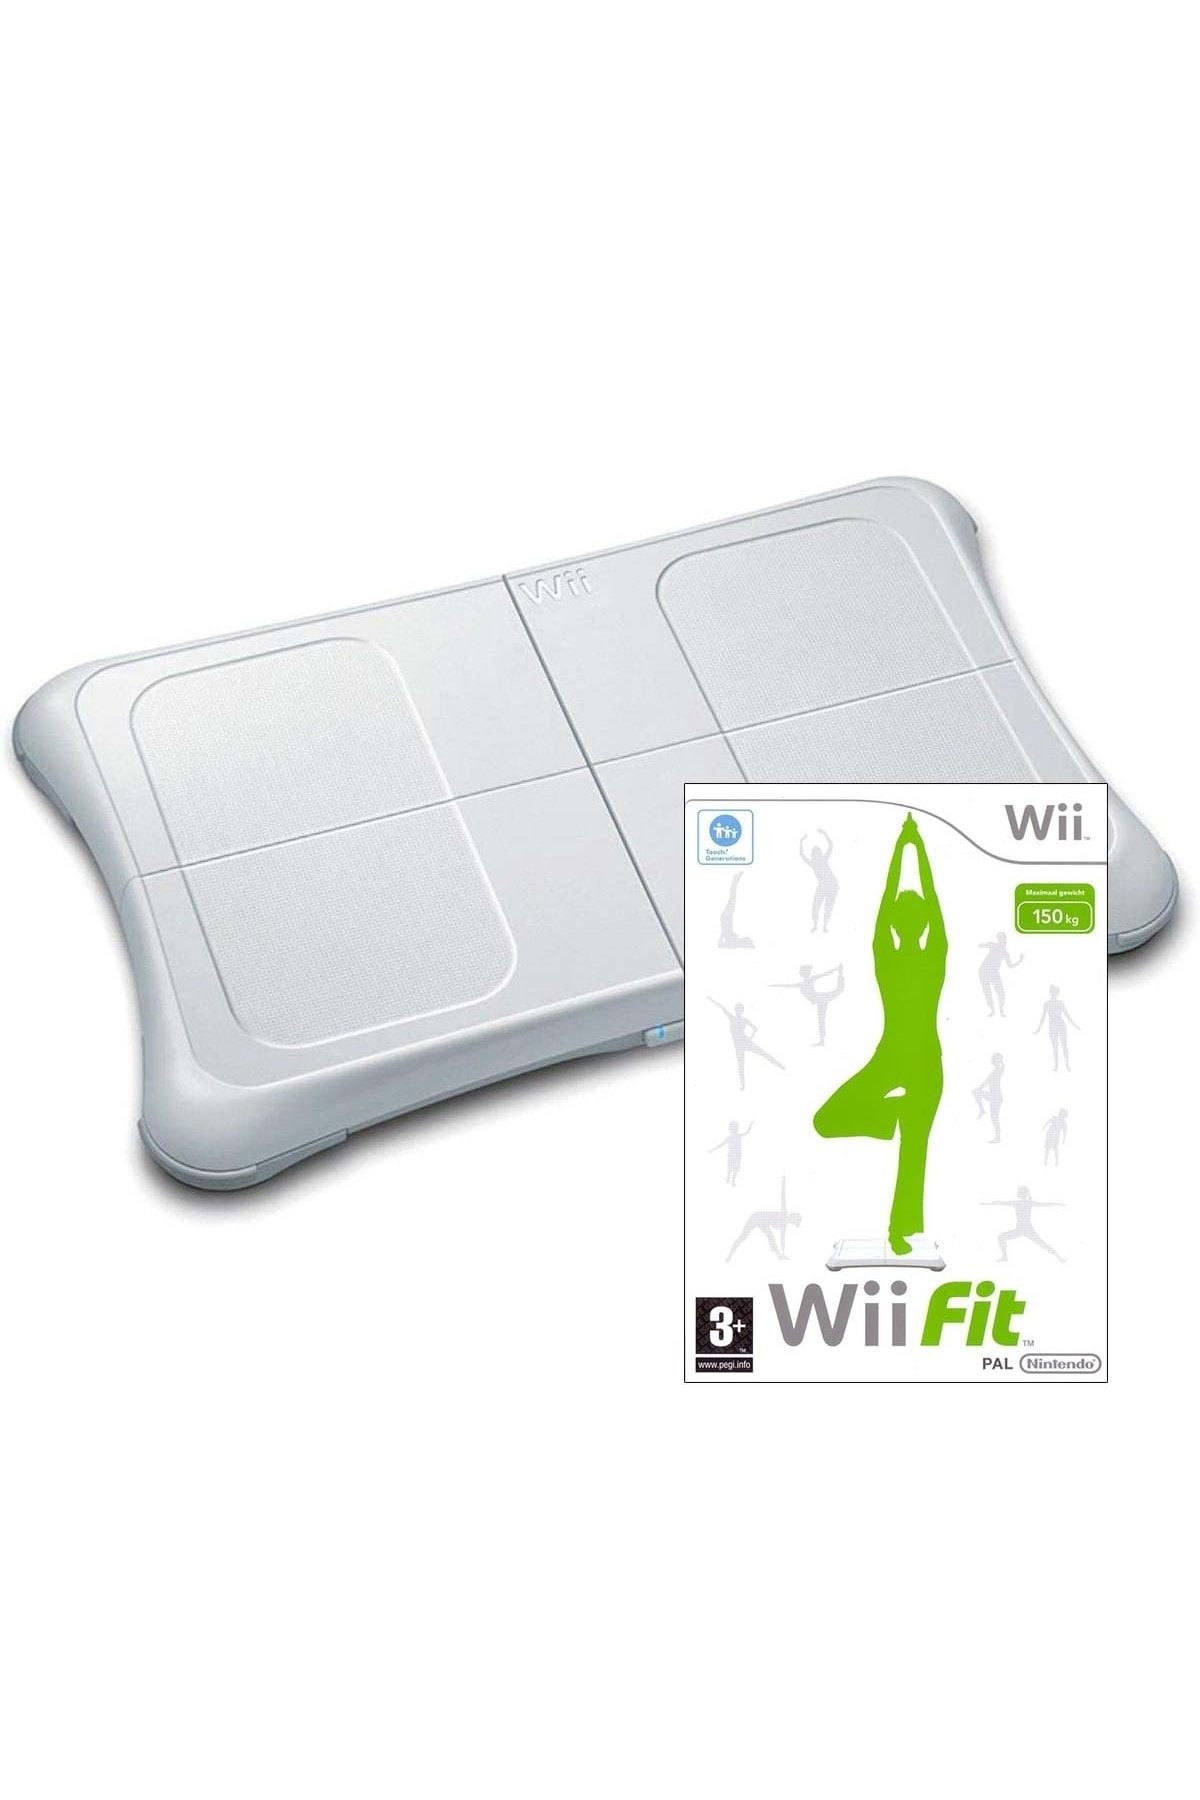 Nintendo Wii Balance Board Ve Wii Fit Oyun Wii Aksesuar Balans Tahtası Seti